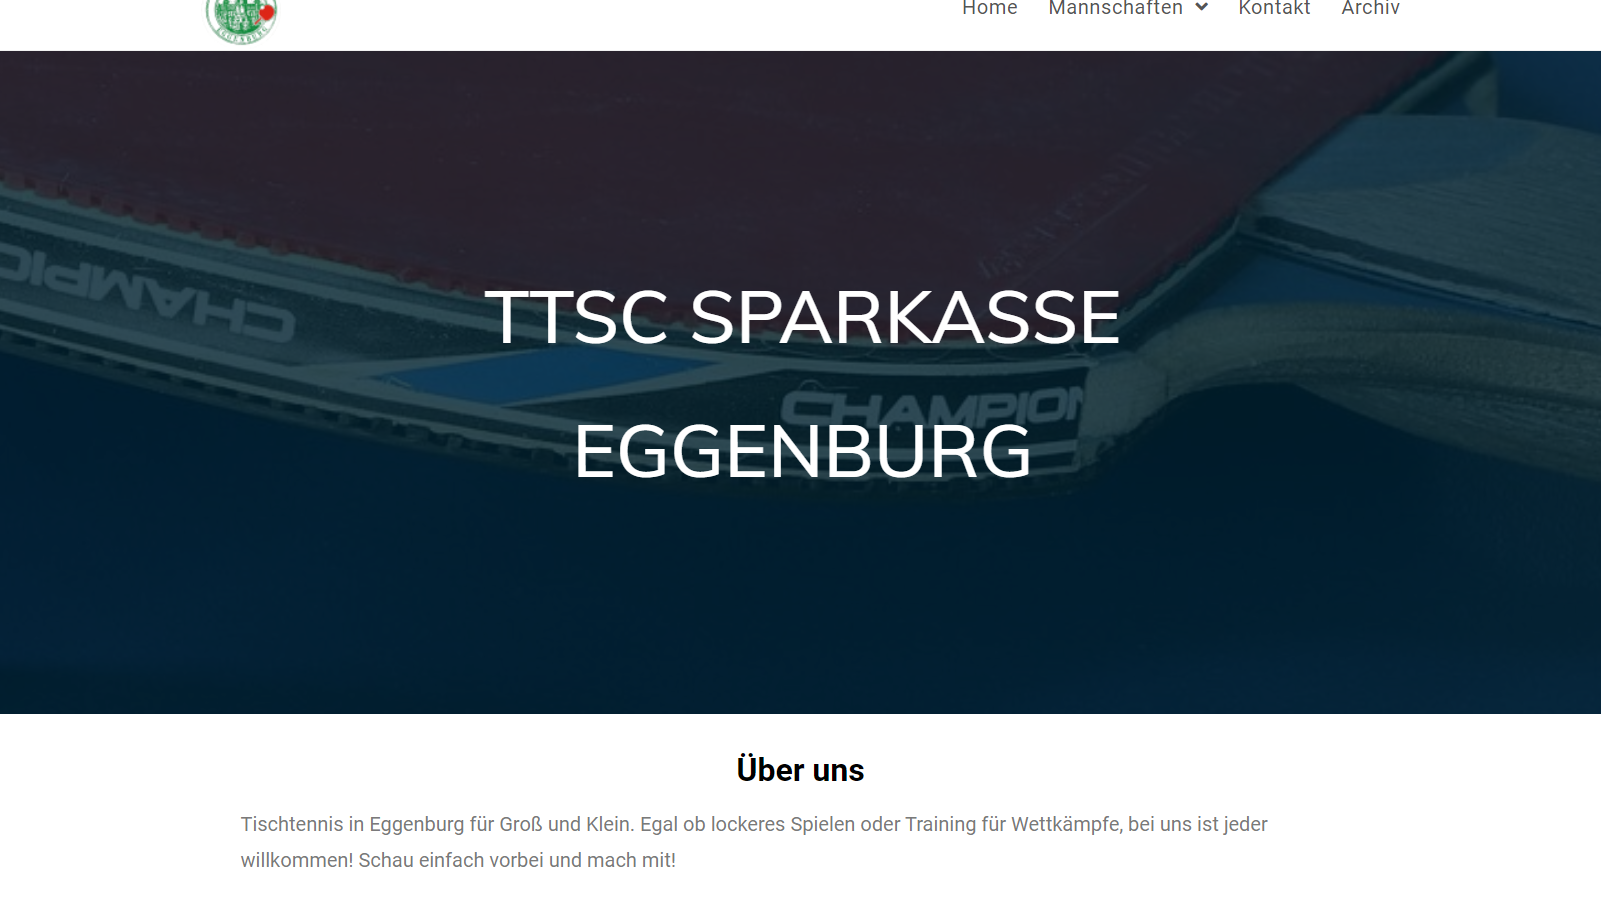 Homepage TTSC Sparkasse Eggenburg